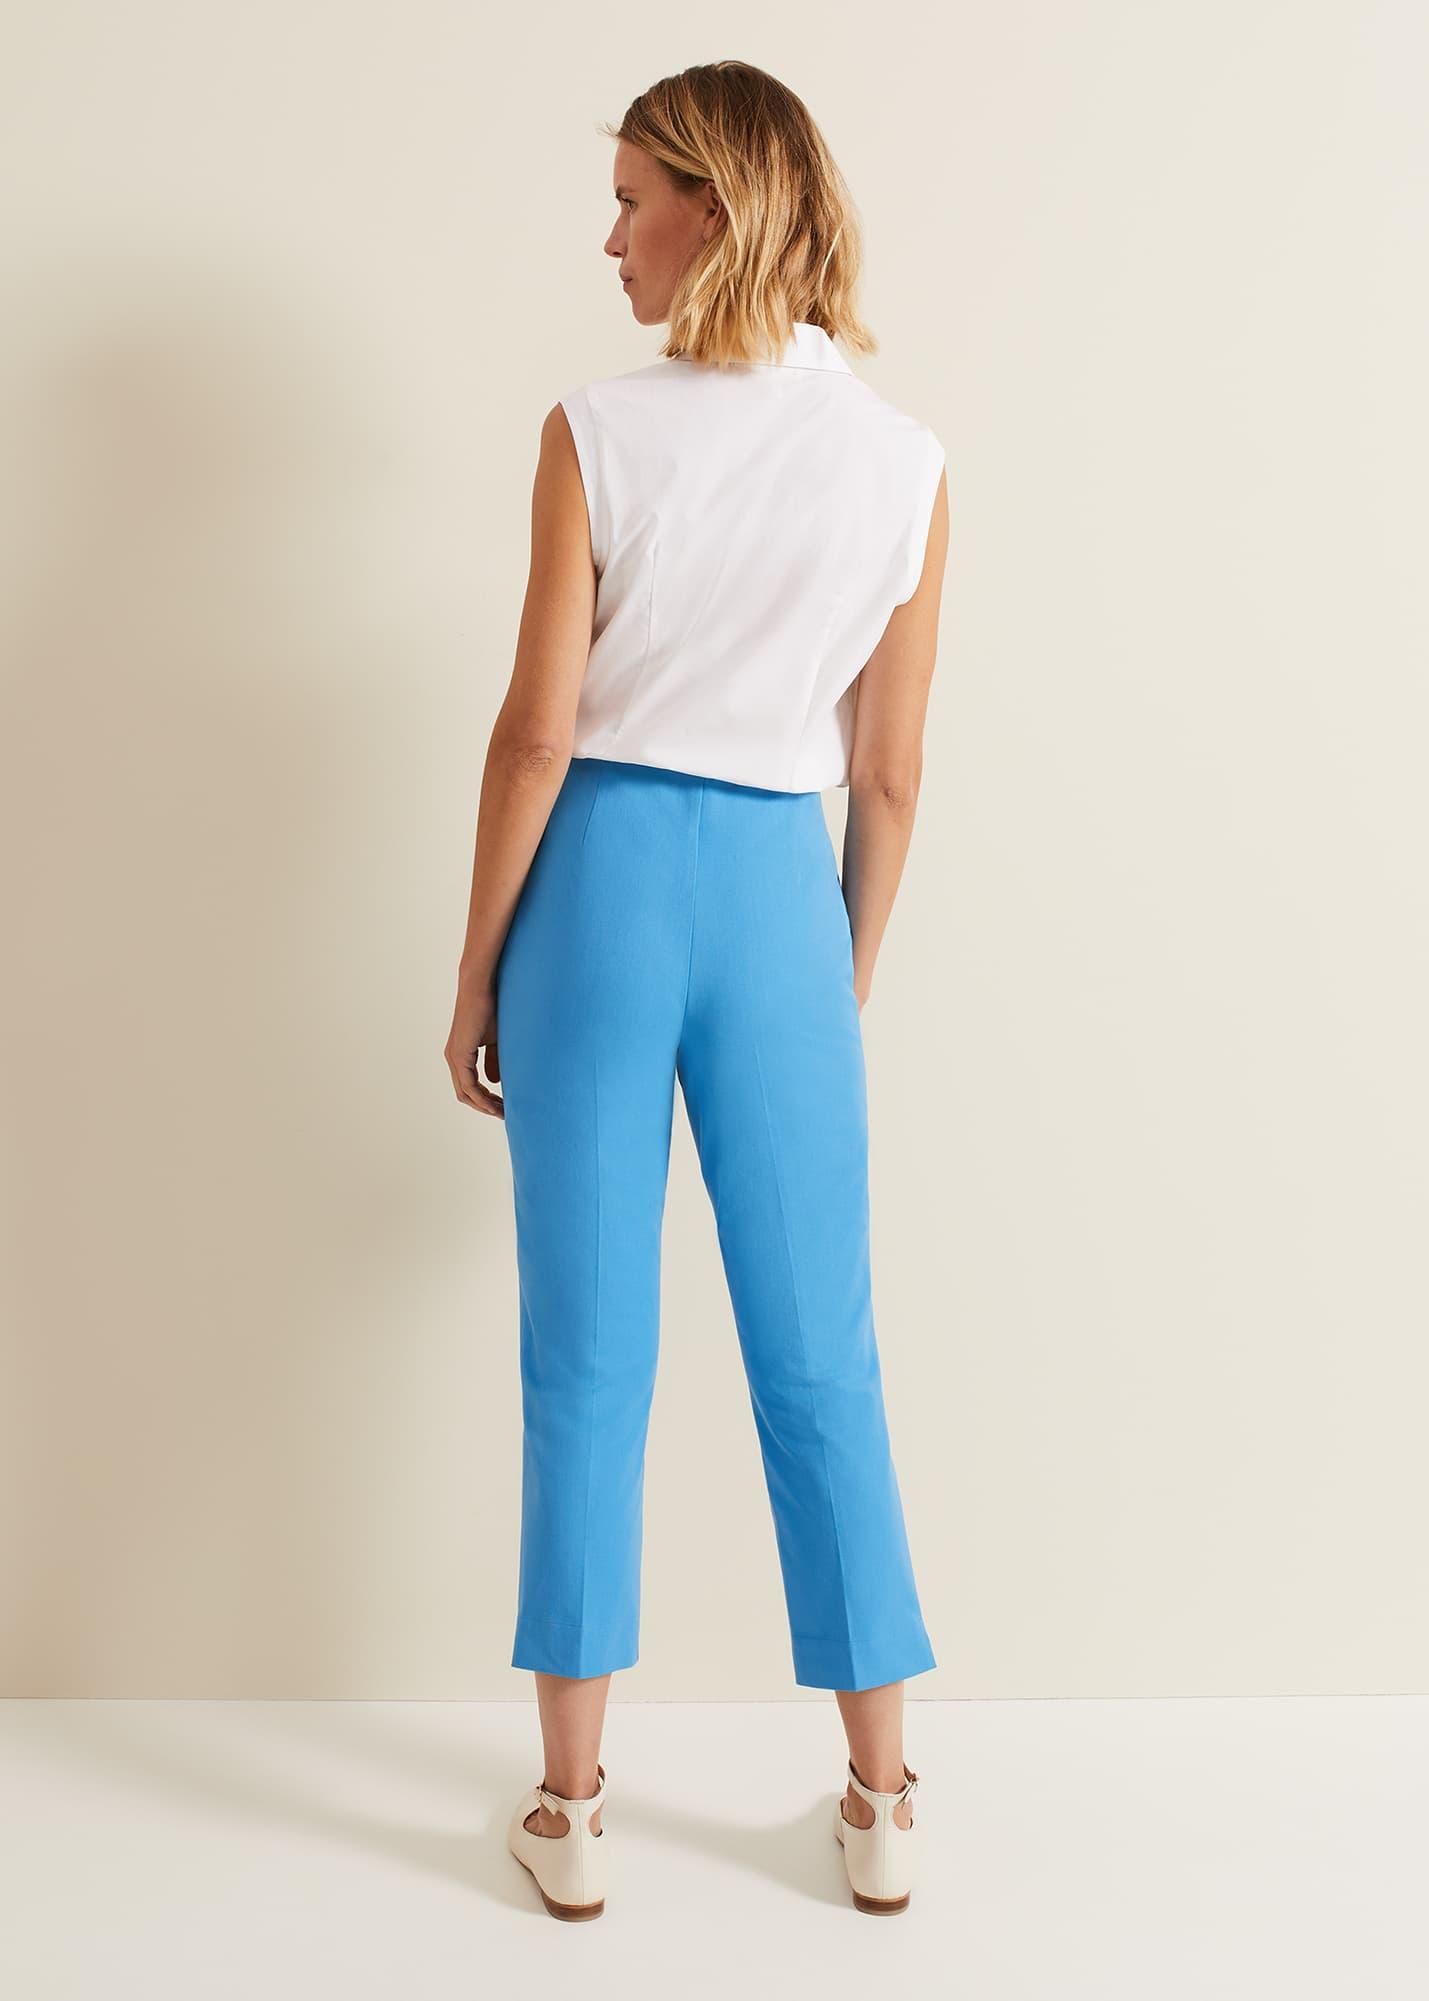 Phase Eight 's Miah Stretch Capri Trouser in Blue